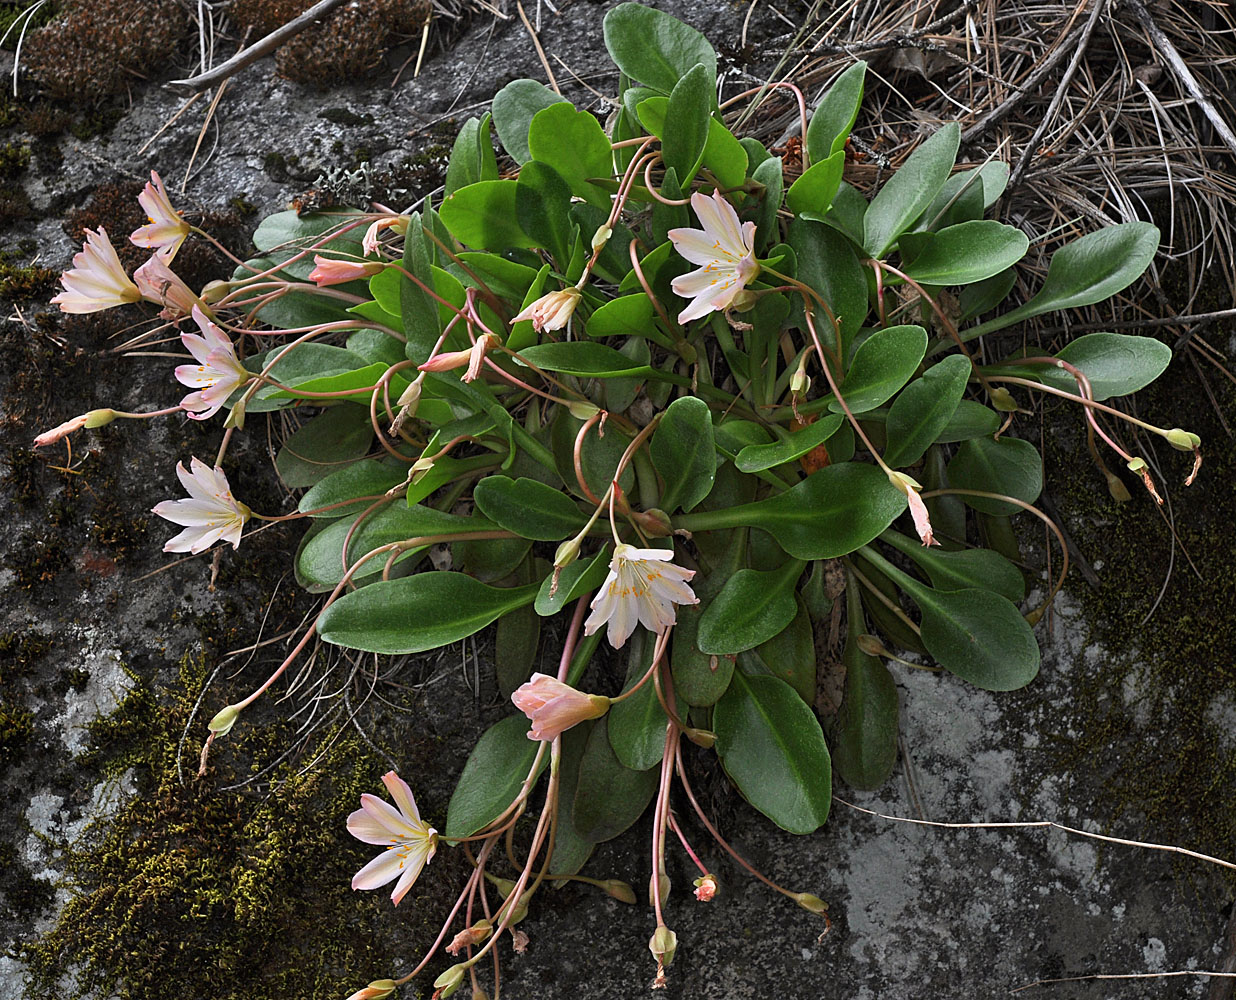 Flora of Eastern Washington Image: Lewisiopsis tweedyi